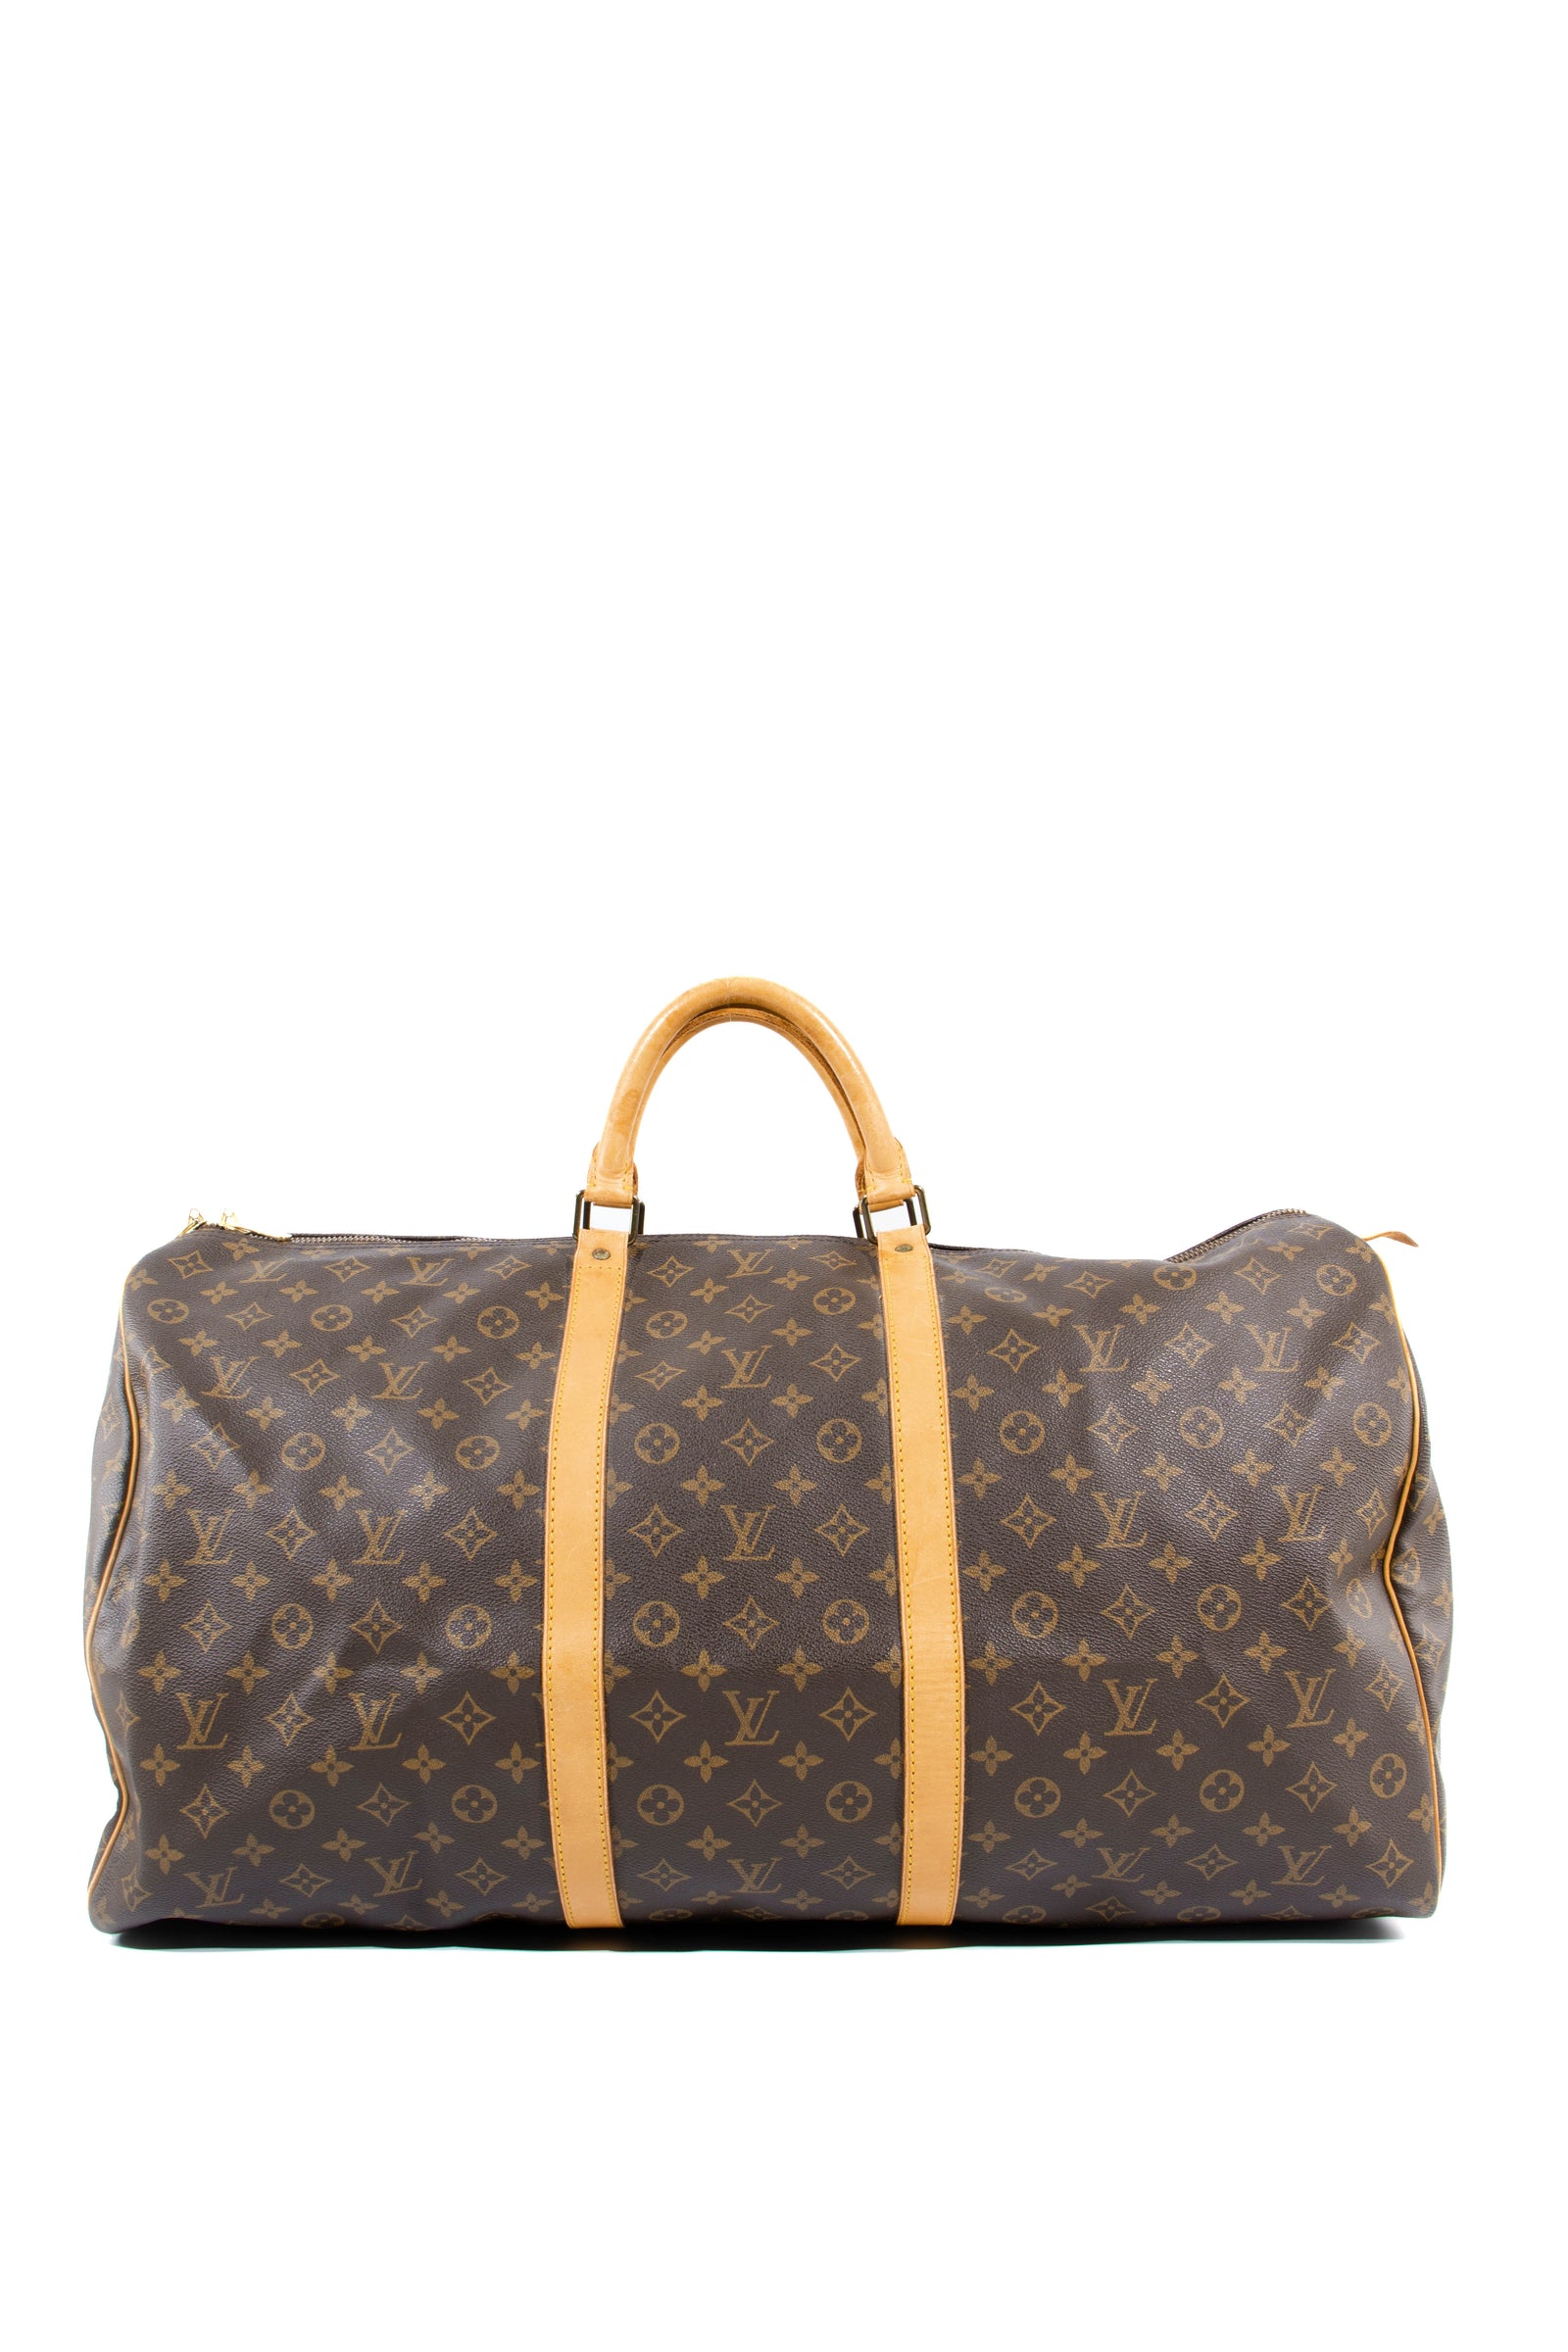 Louis Vuitton - Authenticated Handbag - Suede Beige Plain for Women, Very Good Condition